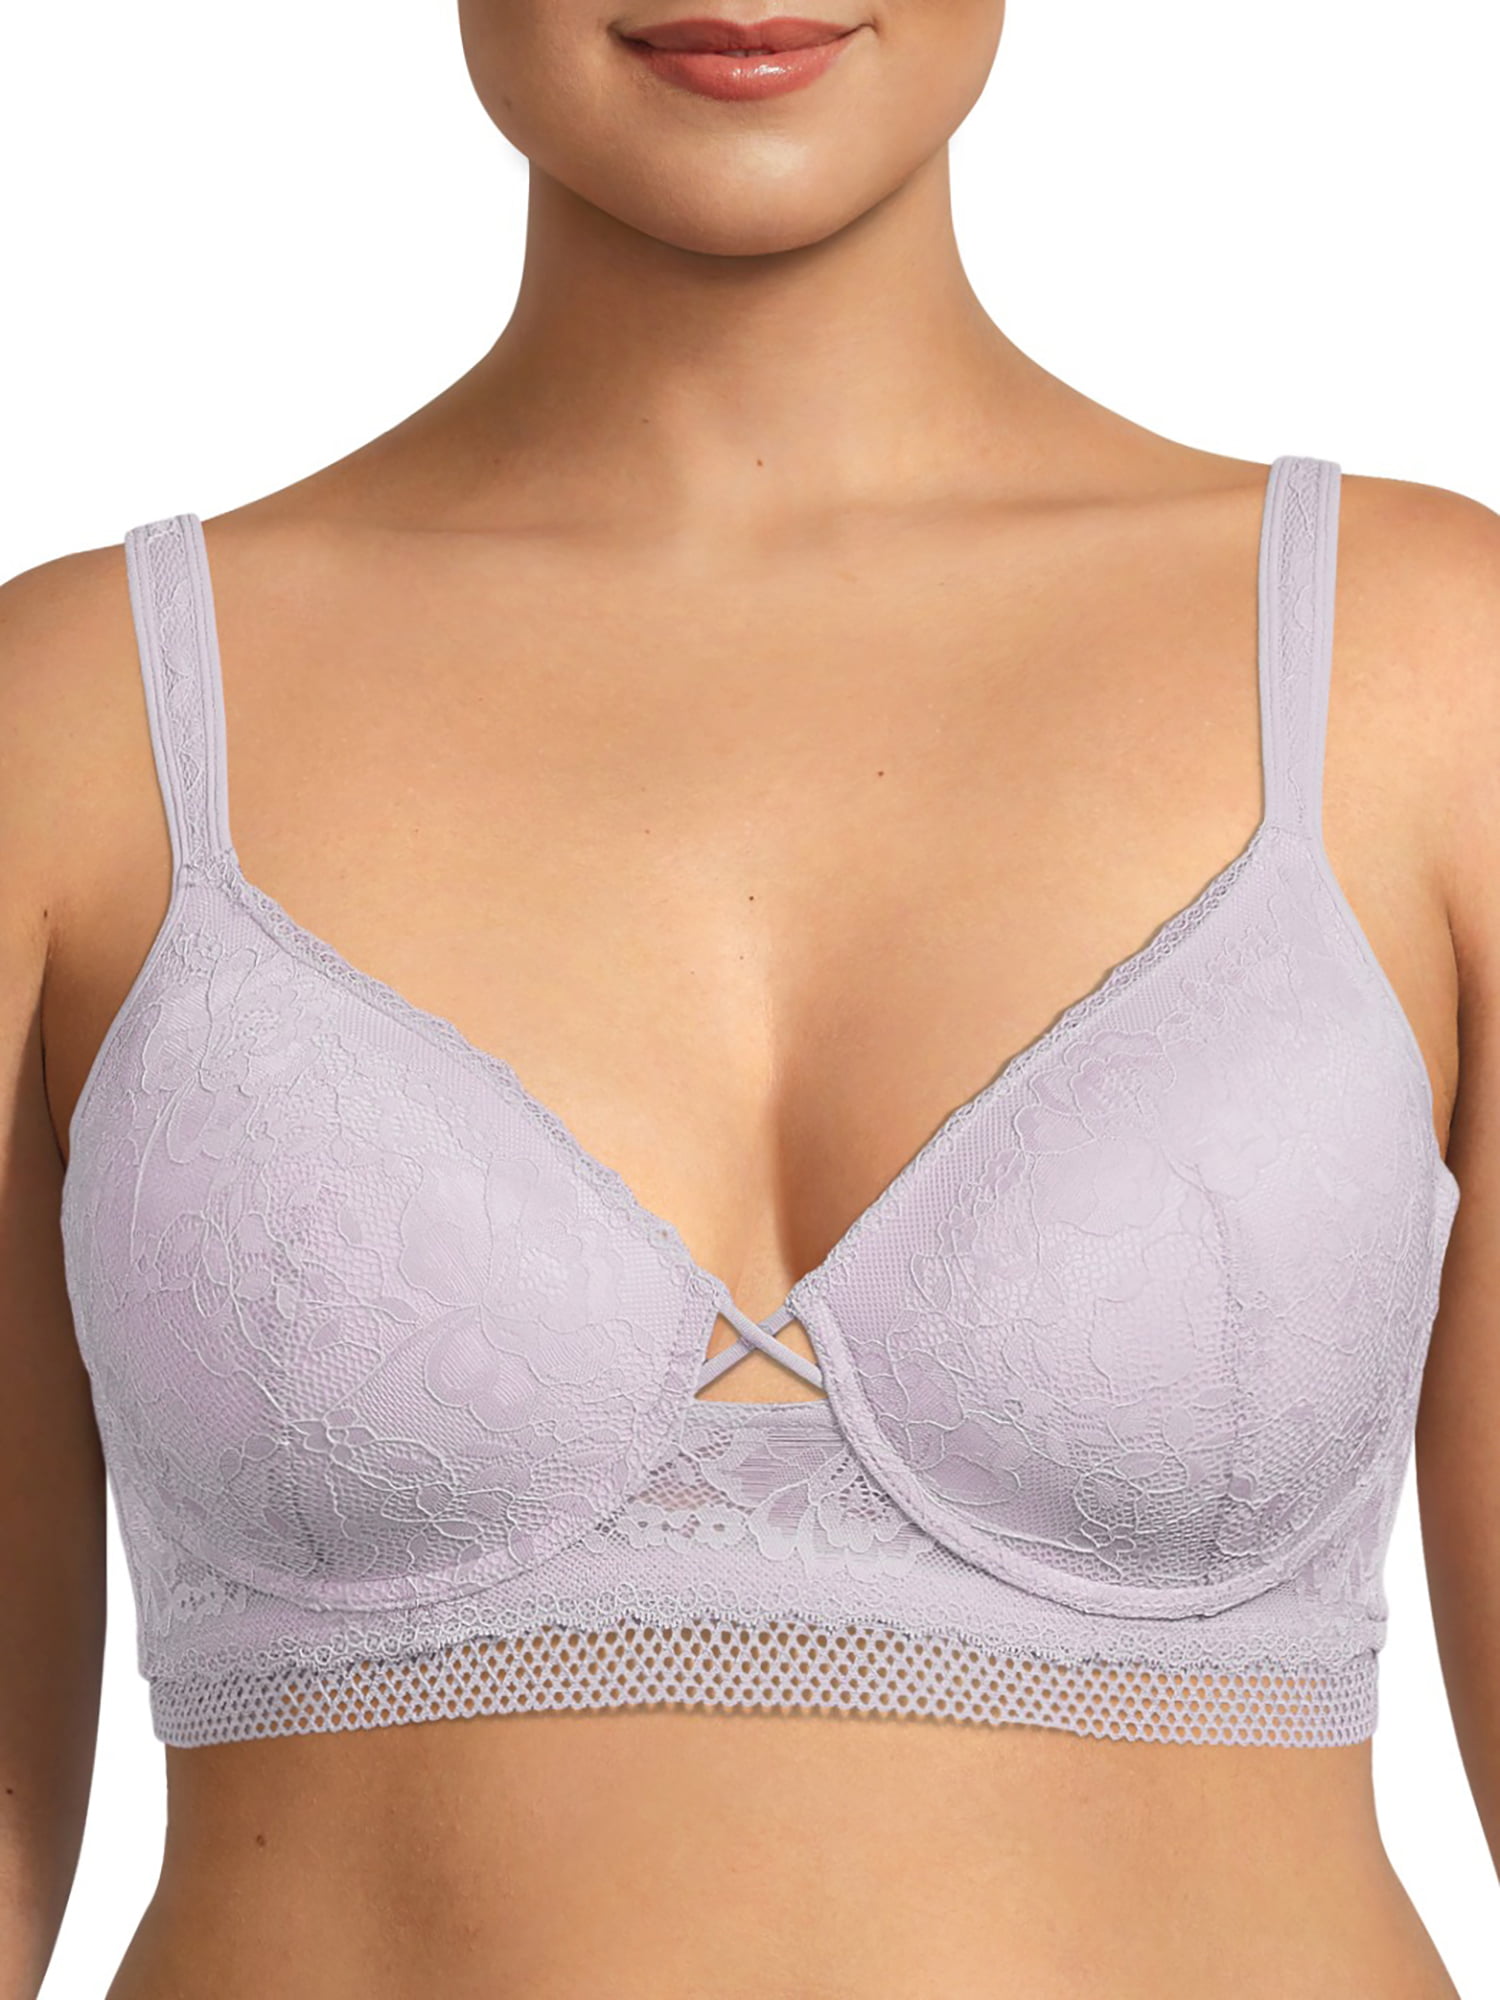 Jessica Simpson Bra Pink Size 36 C - $20 (72% Off Retail) New